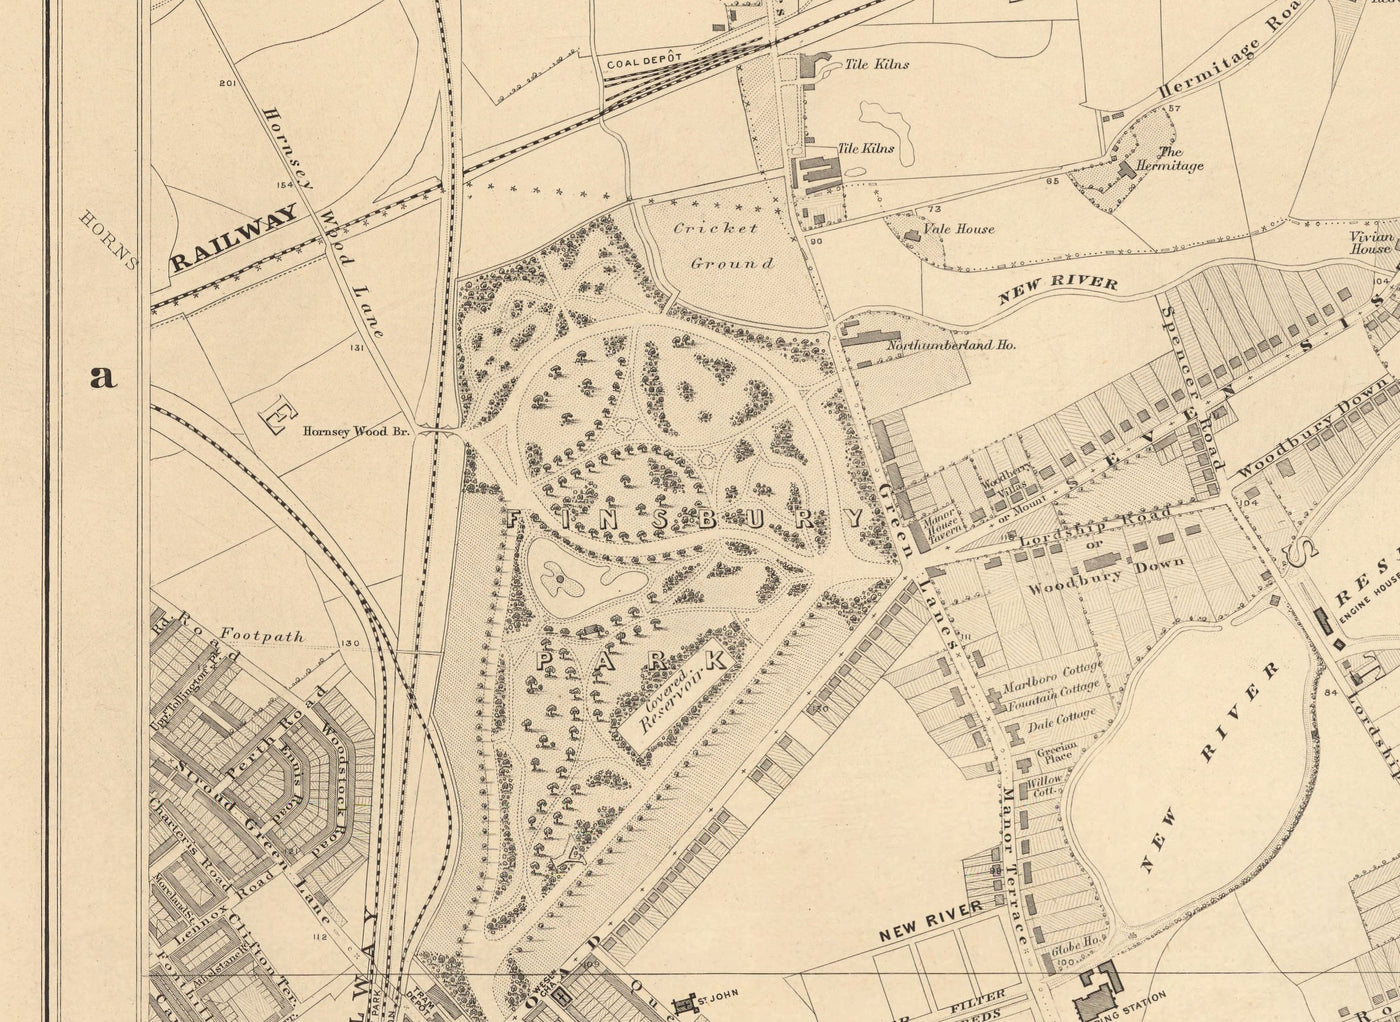 Mapa antiguo de North London, 1862 de Edward Stanford - FinSbury Park, Hackney Downs, Stoke Newington, Clapton - N4, N5, N15, N16, E5